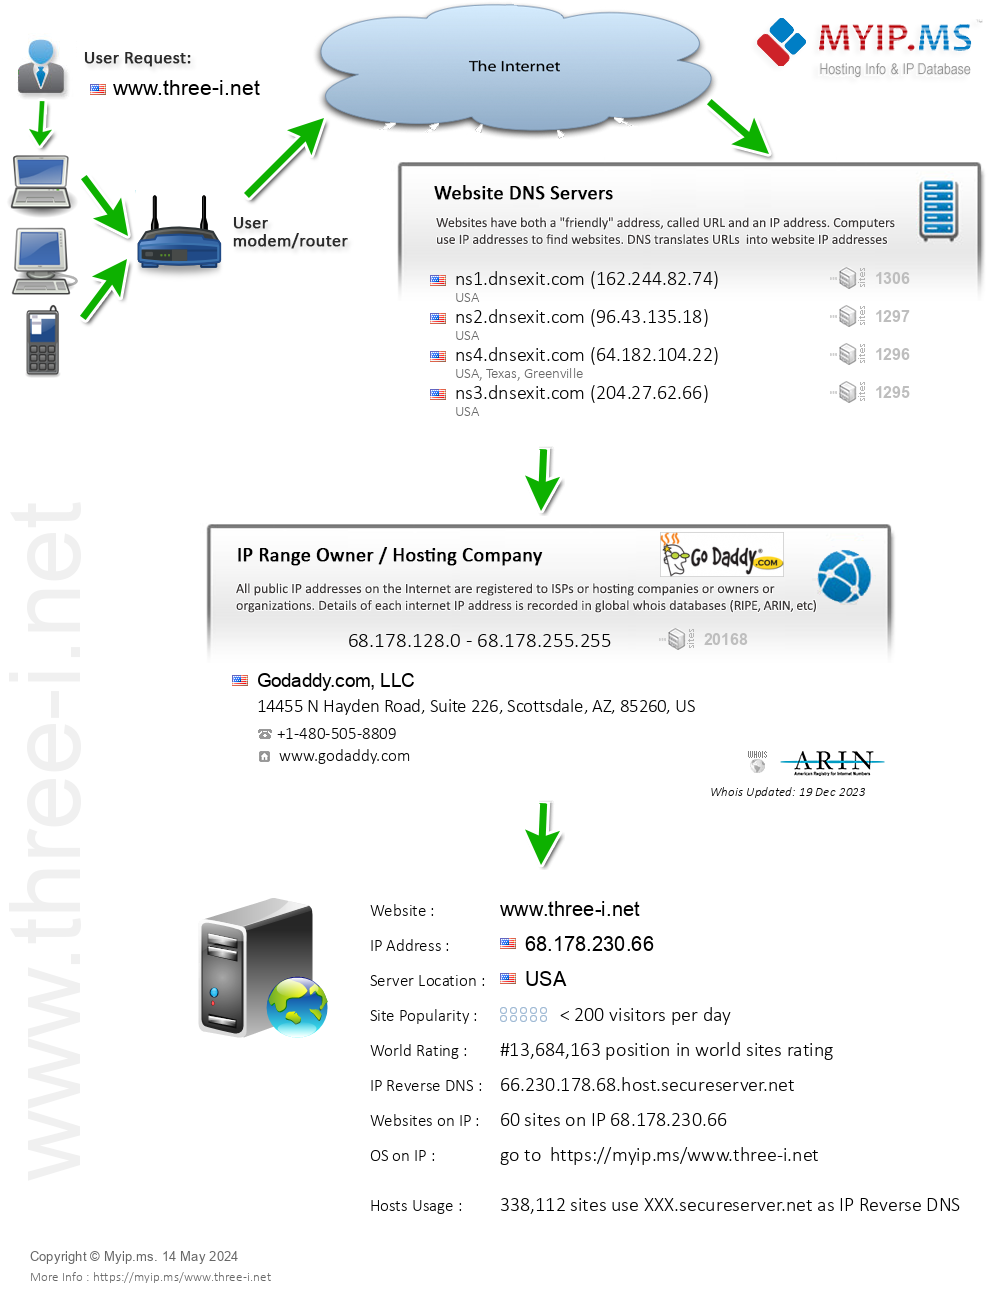 Three-i.net - Website Hosting Visual IP Diagram